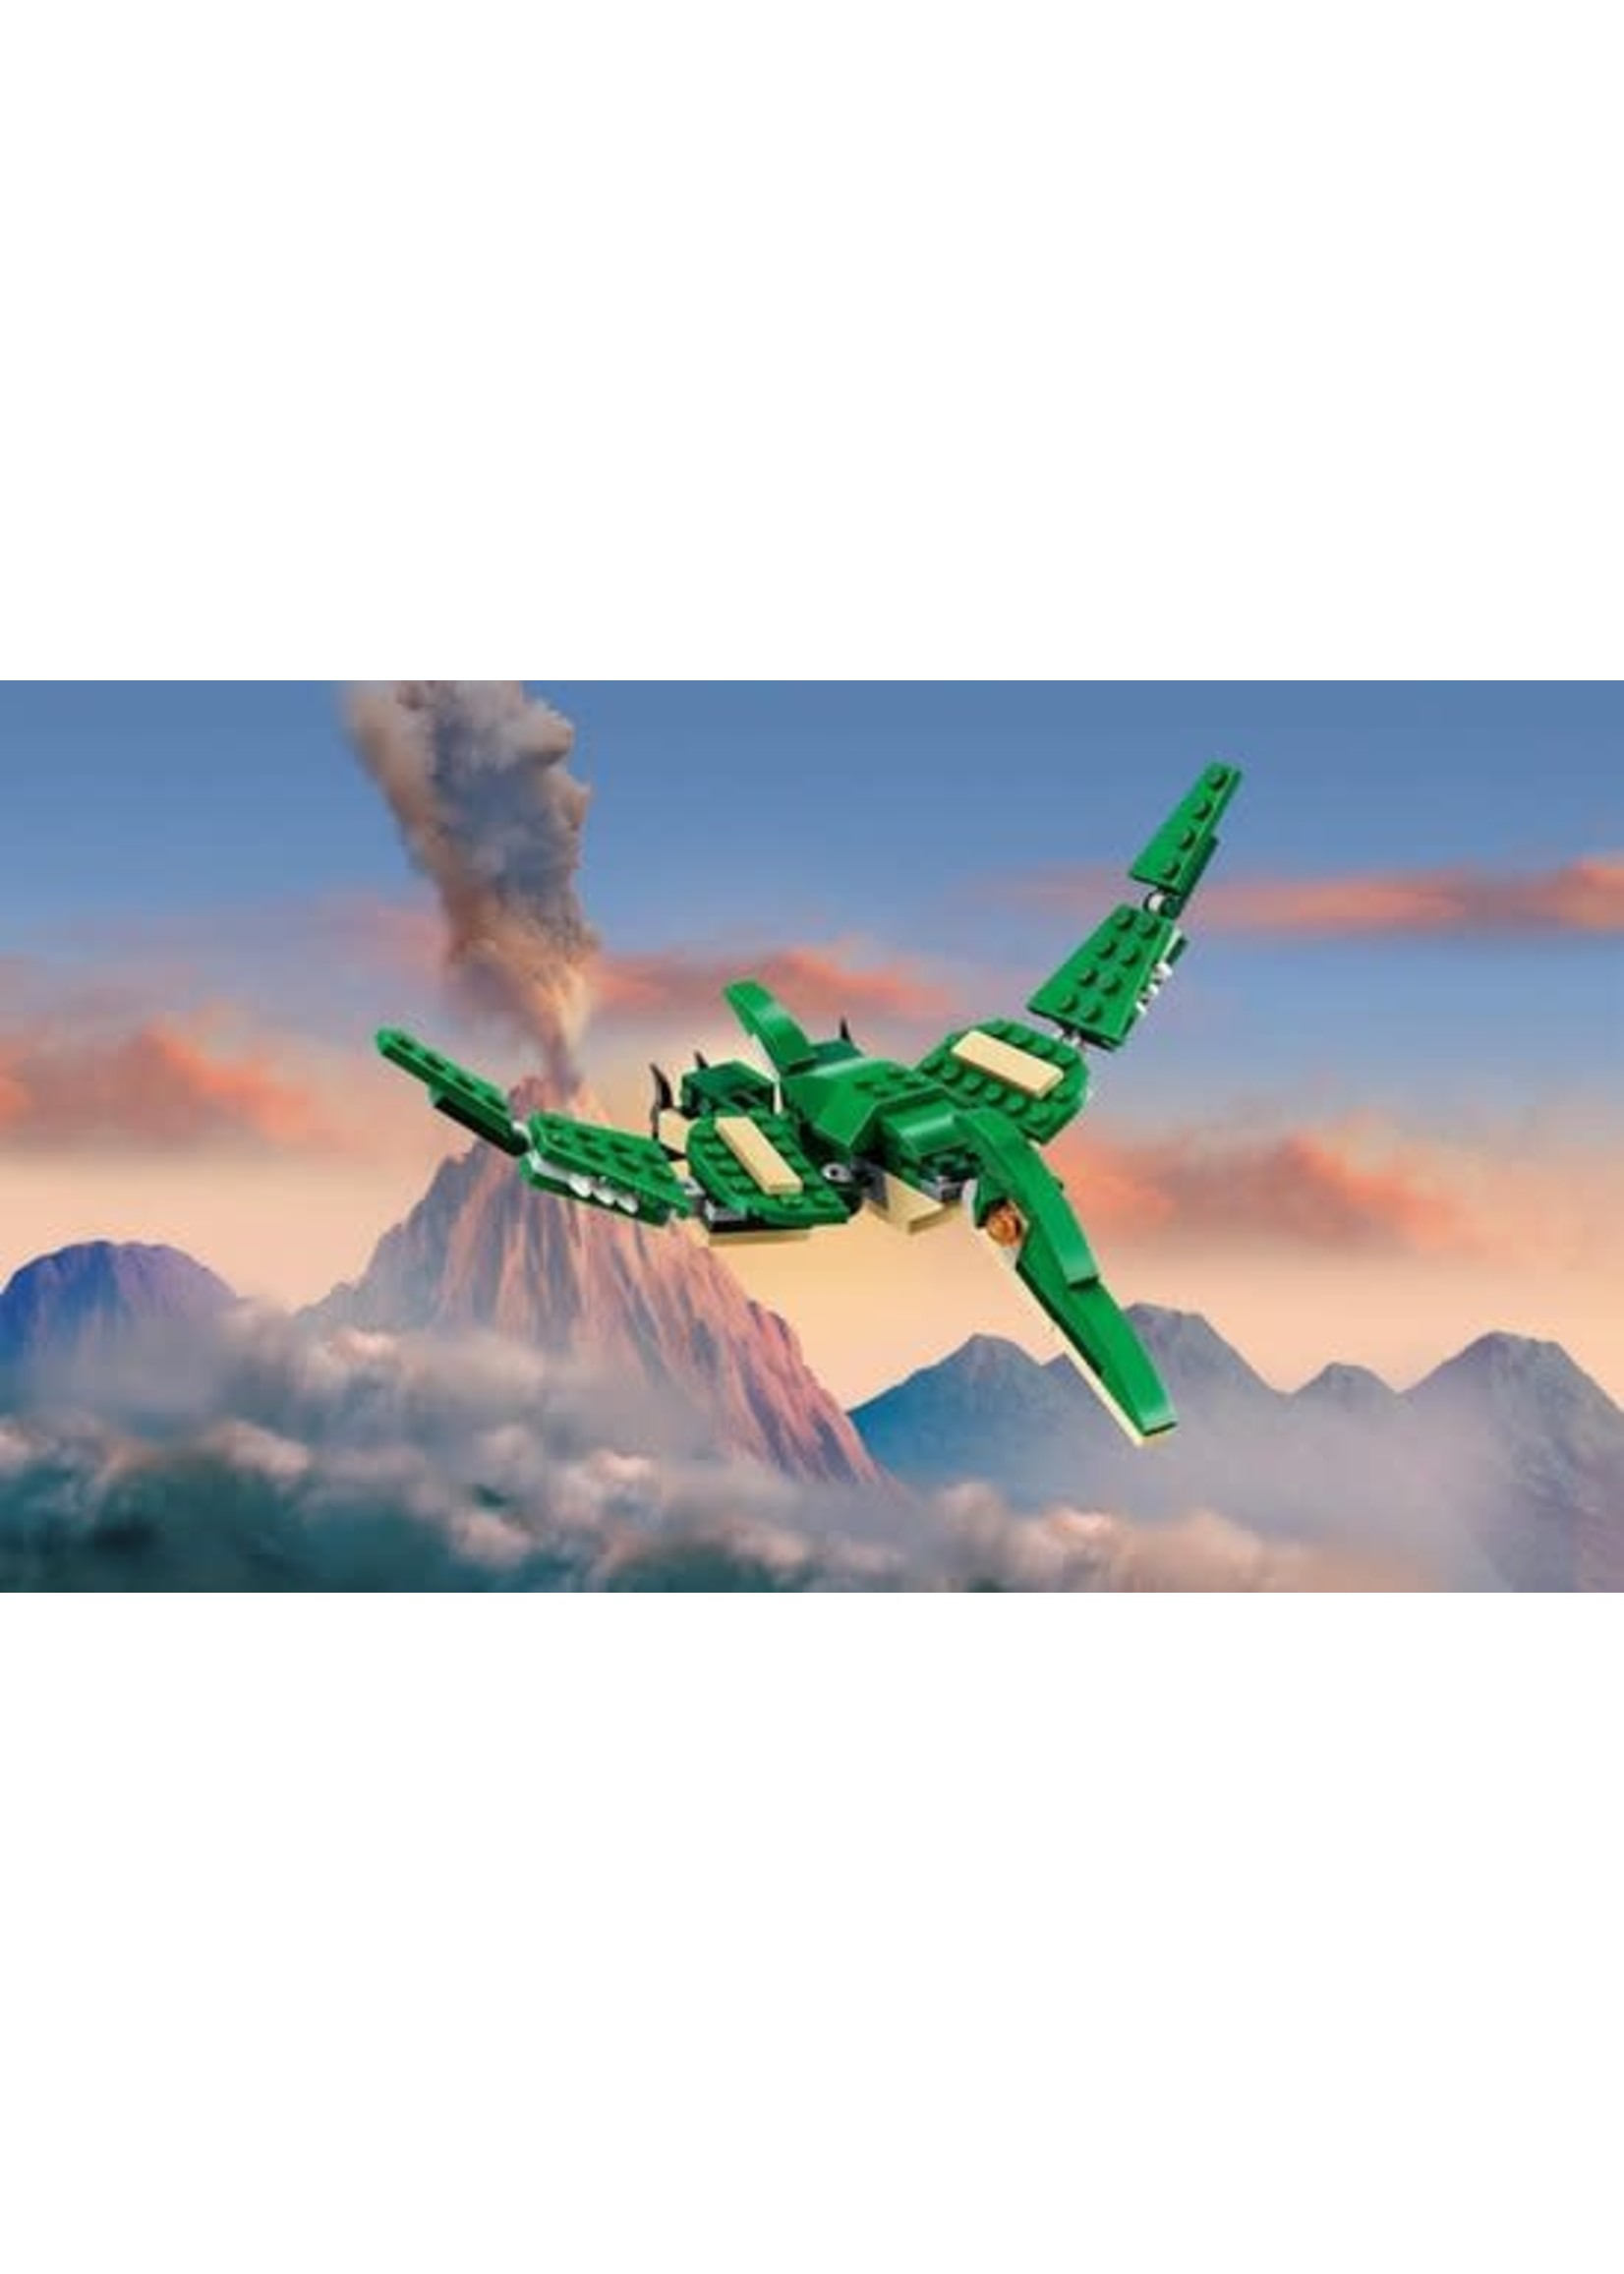 Lego Creator 31058 Machtige Dinosaurussen